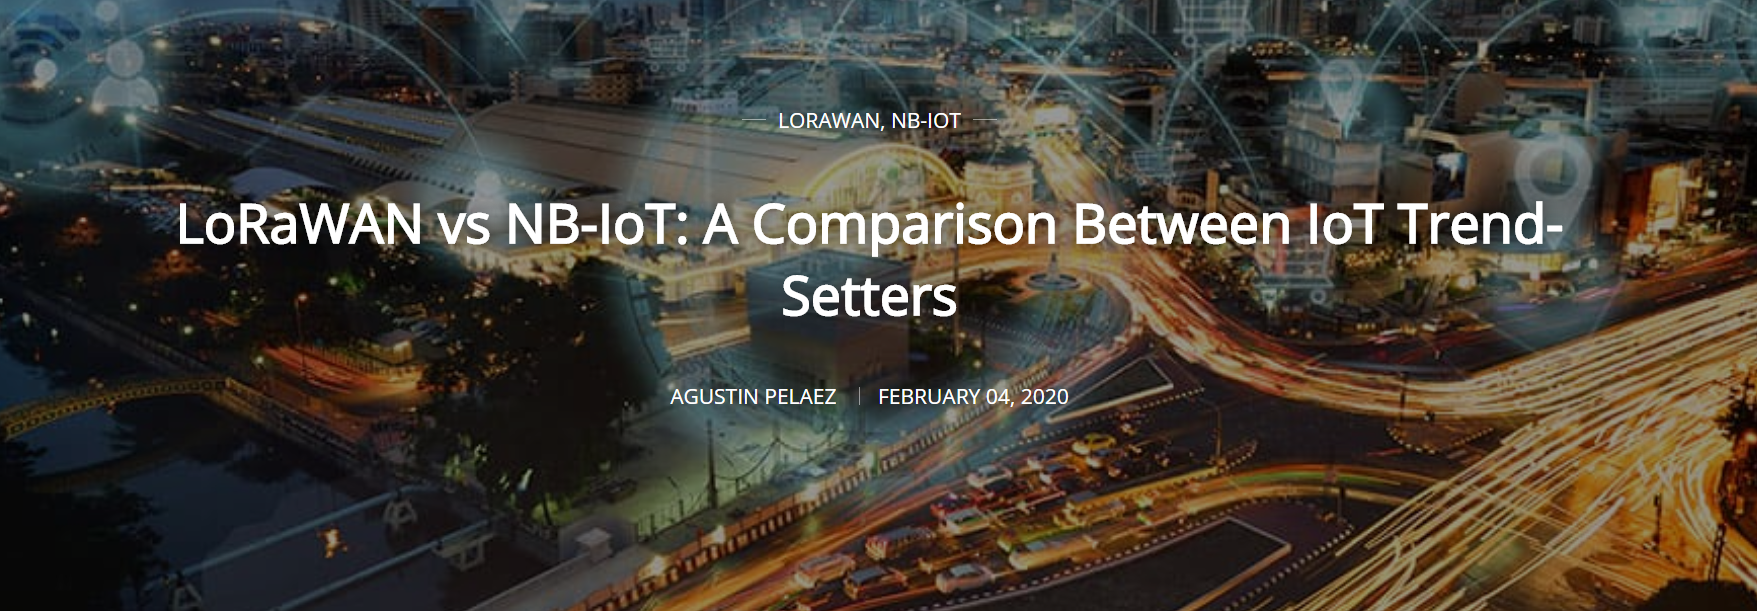 LoRaWAN vs NB-IoT: A Comparison Between IoT Trend-Setters